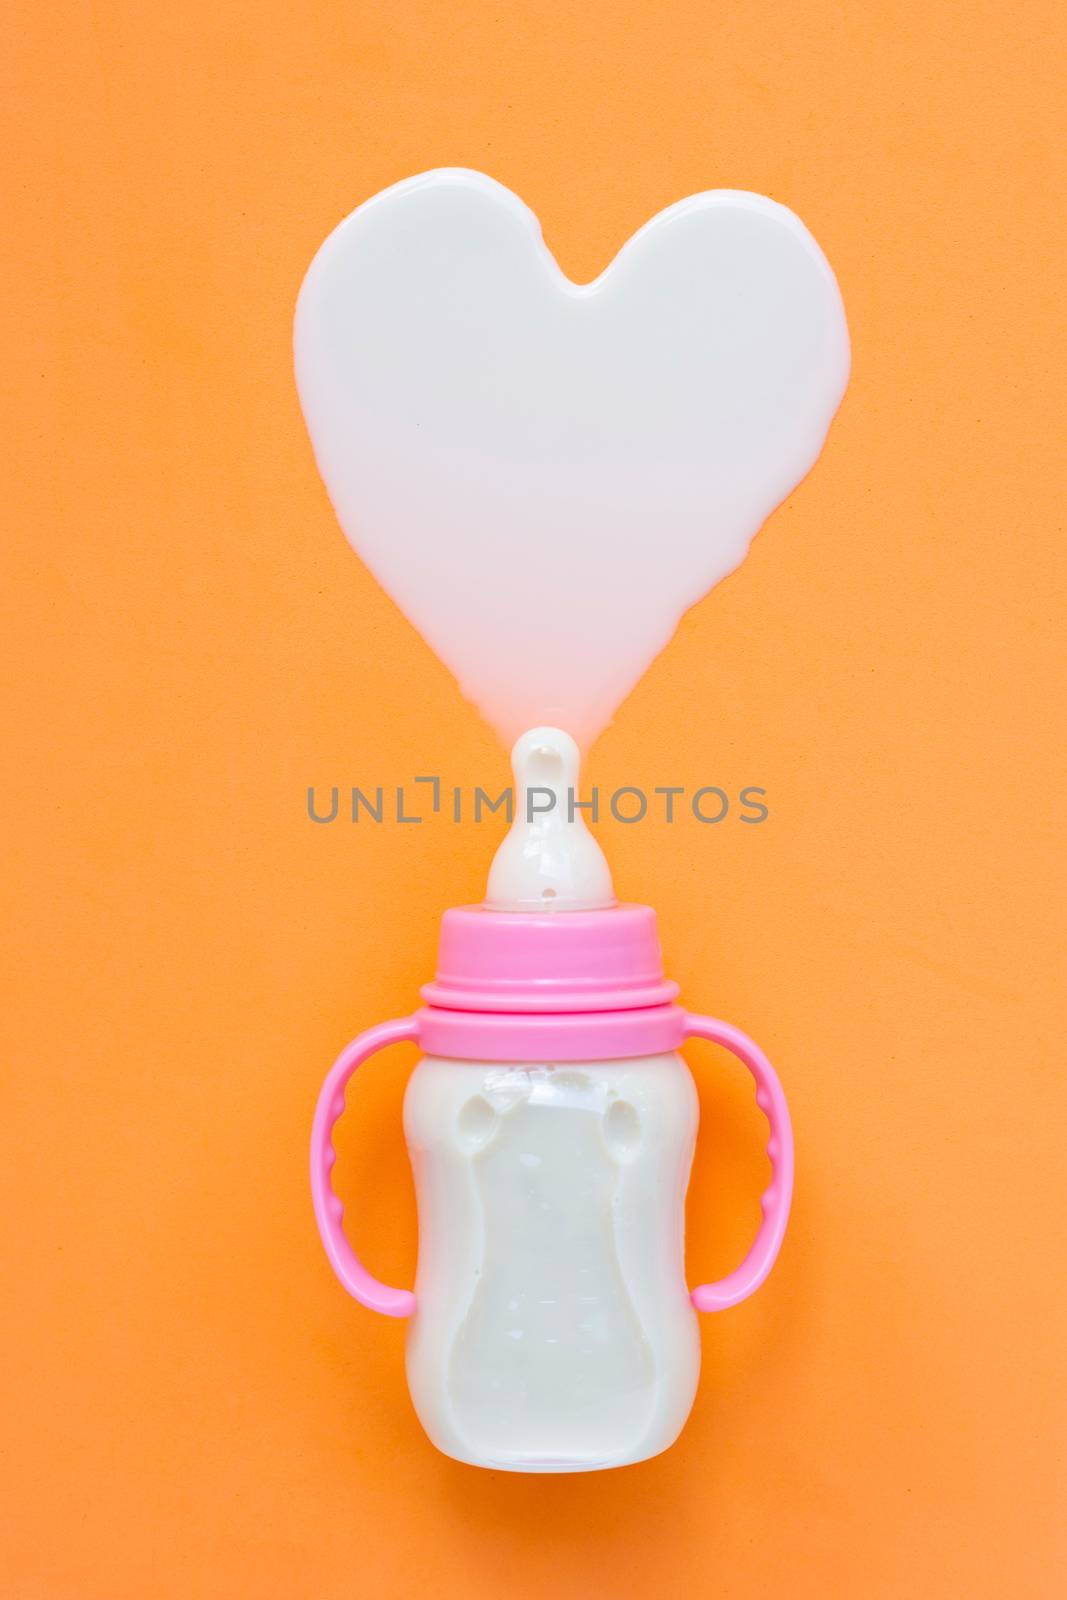 Bottle of milk for baby on orange background. Milk heart shape, Top view